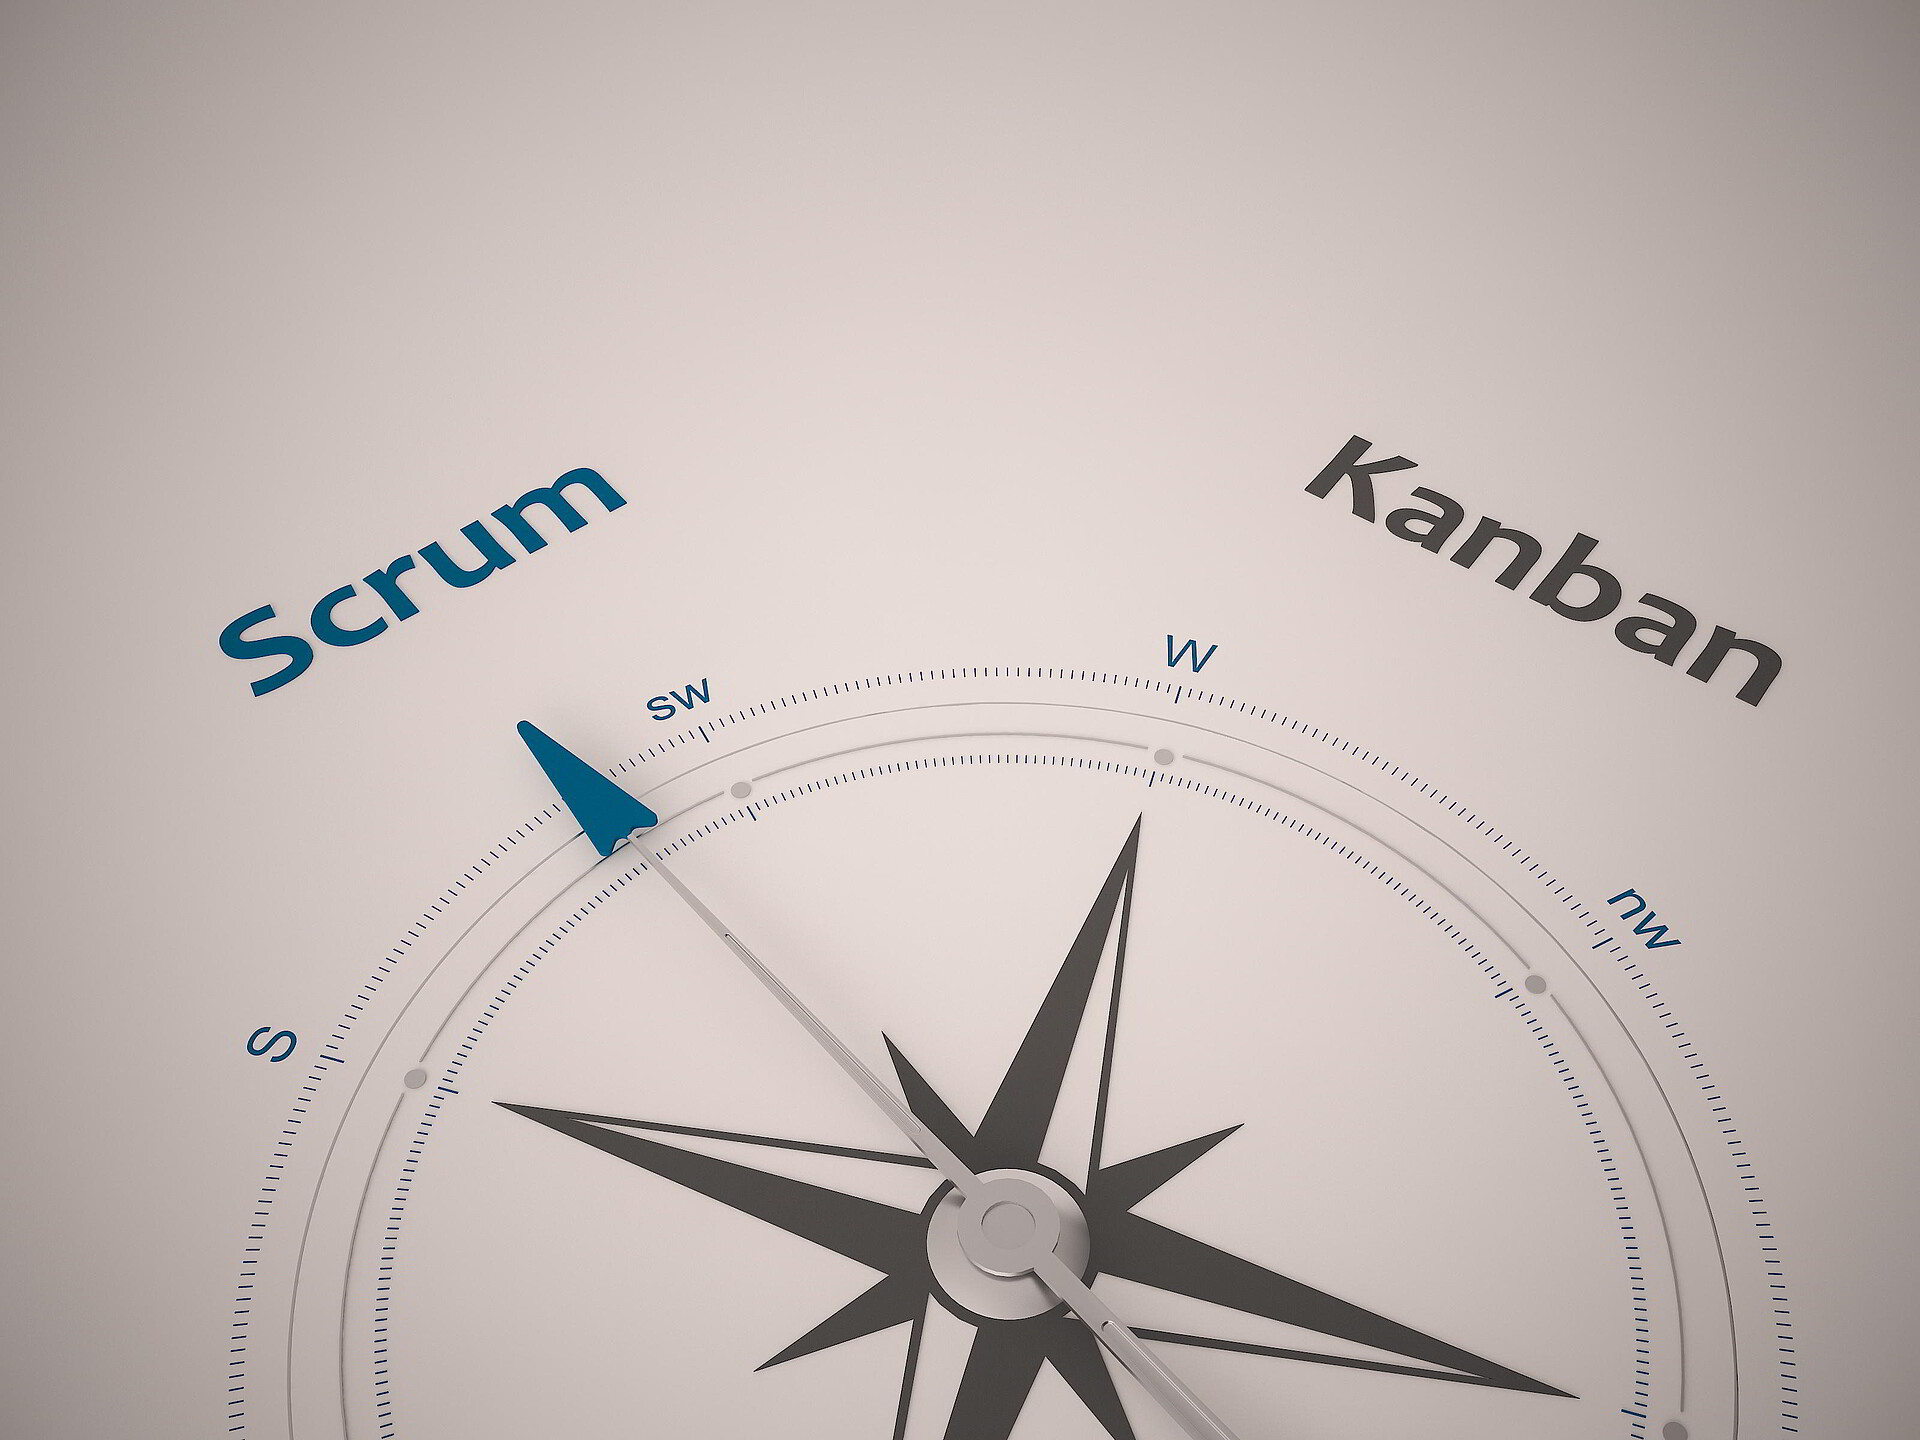 Scrum_Kanban_Kompass.jpg